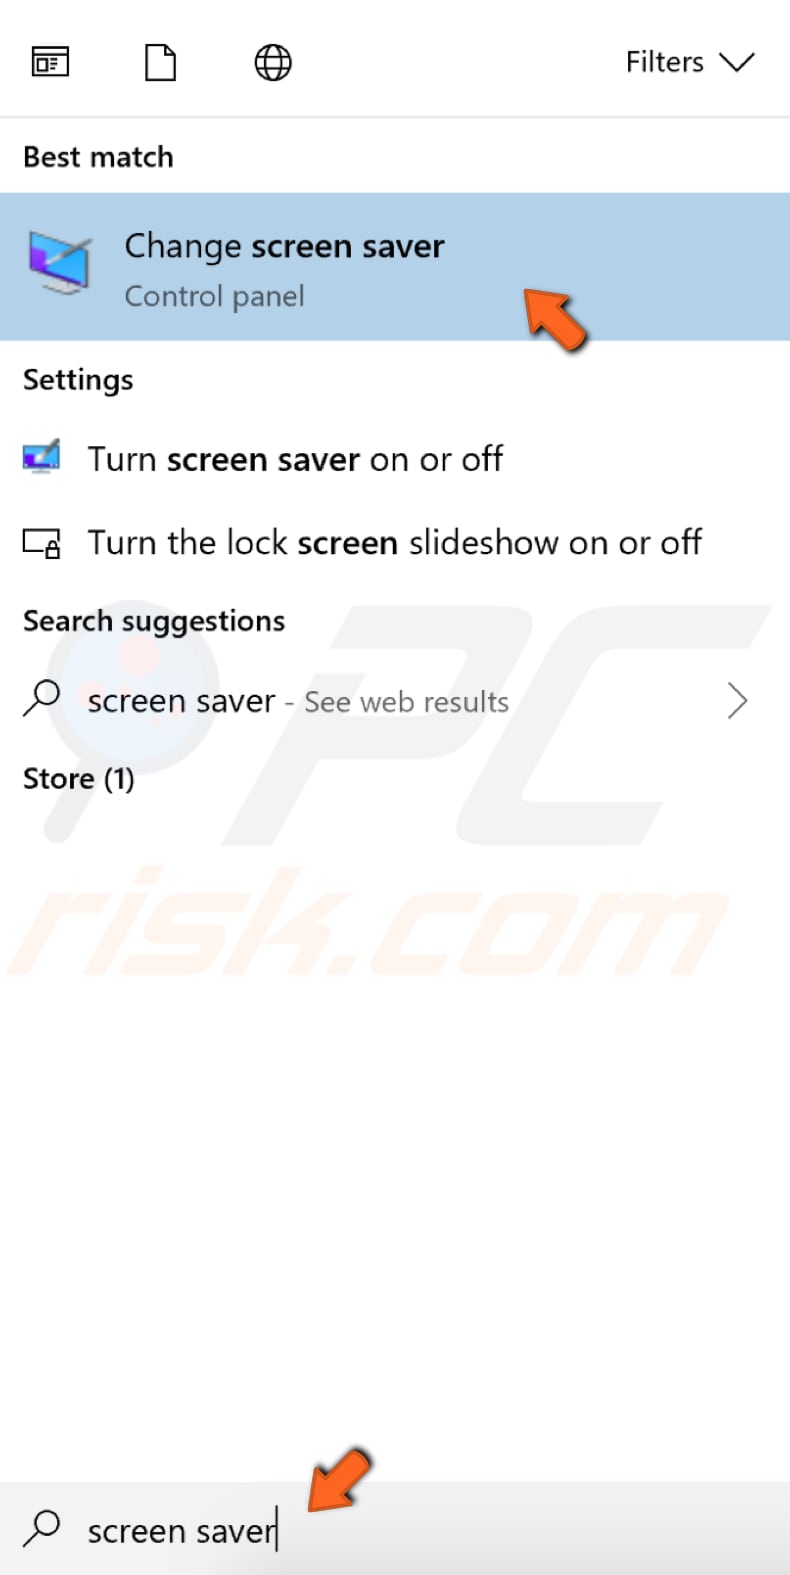 change screen saver step 1